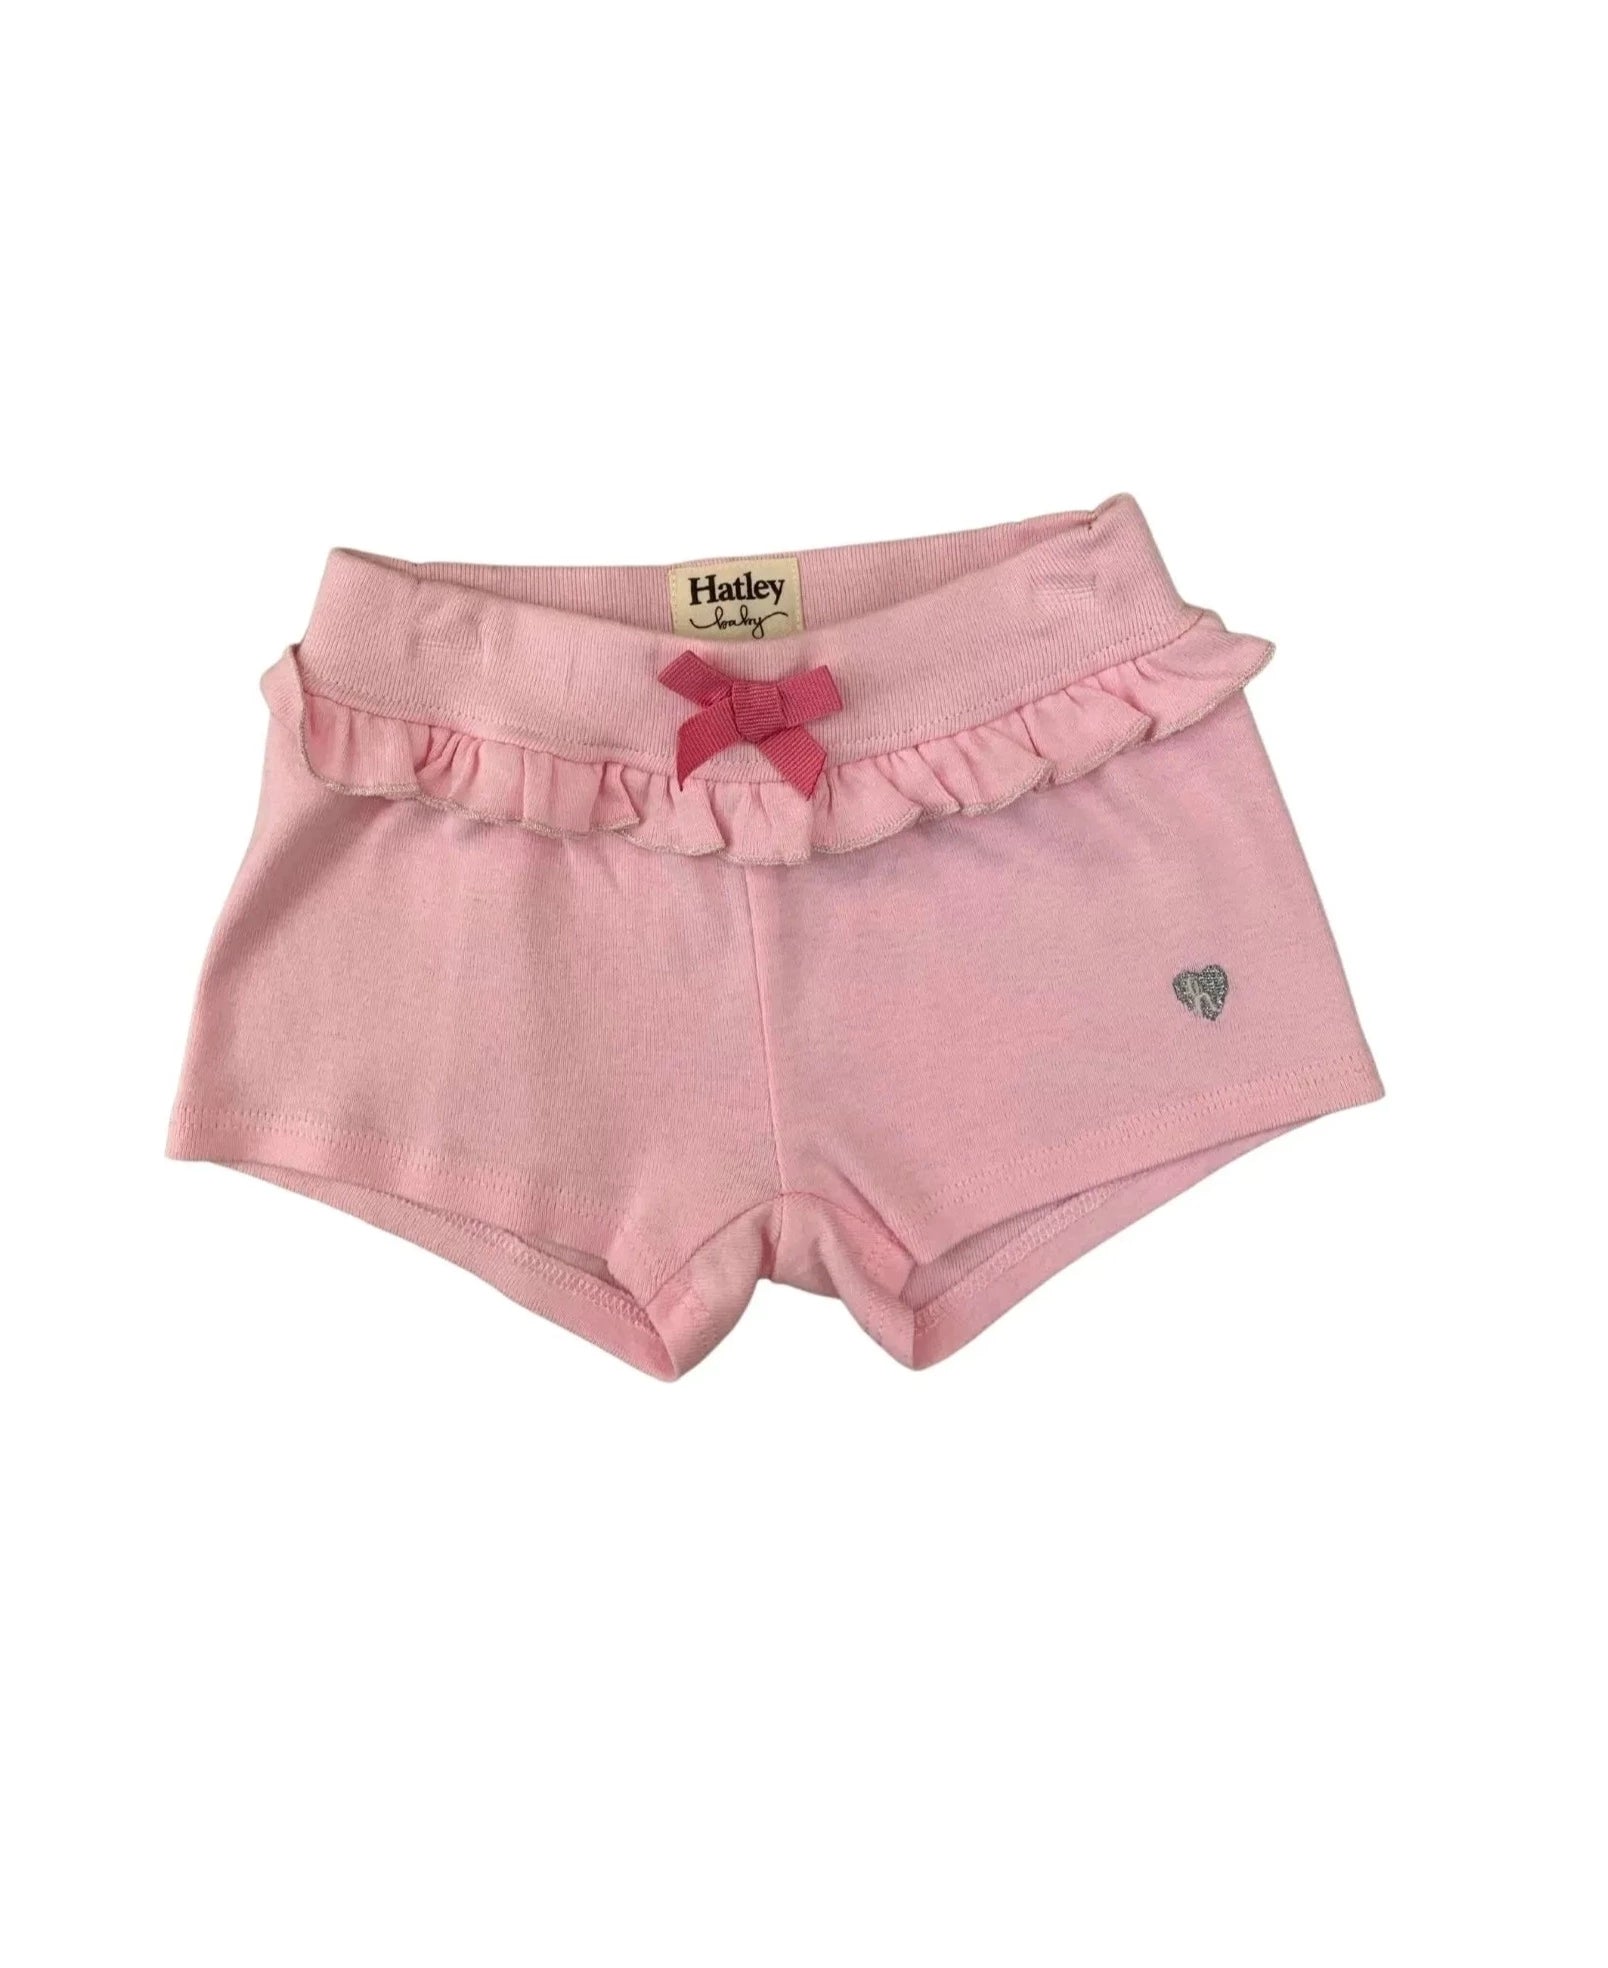 light pink ruffle shorts - Hatley shorts